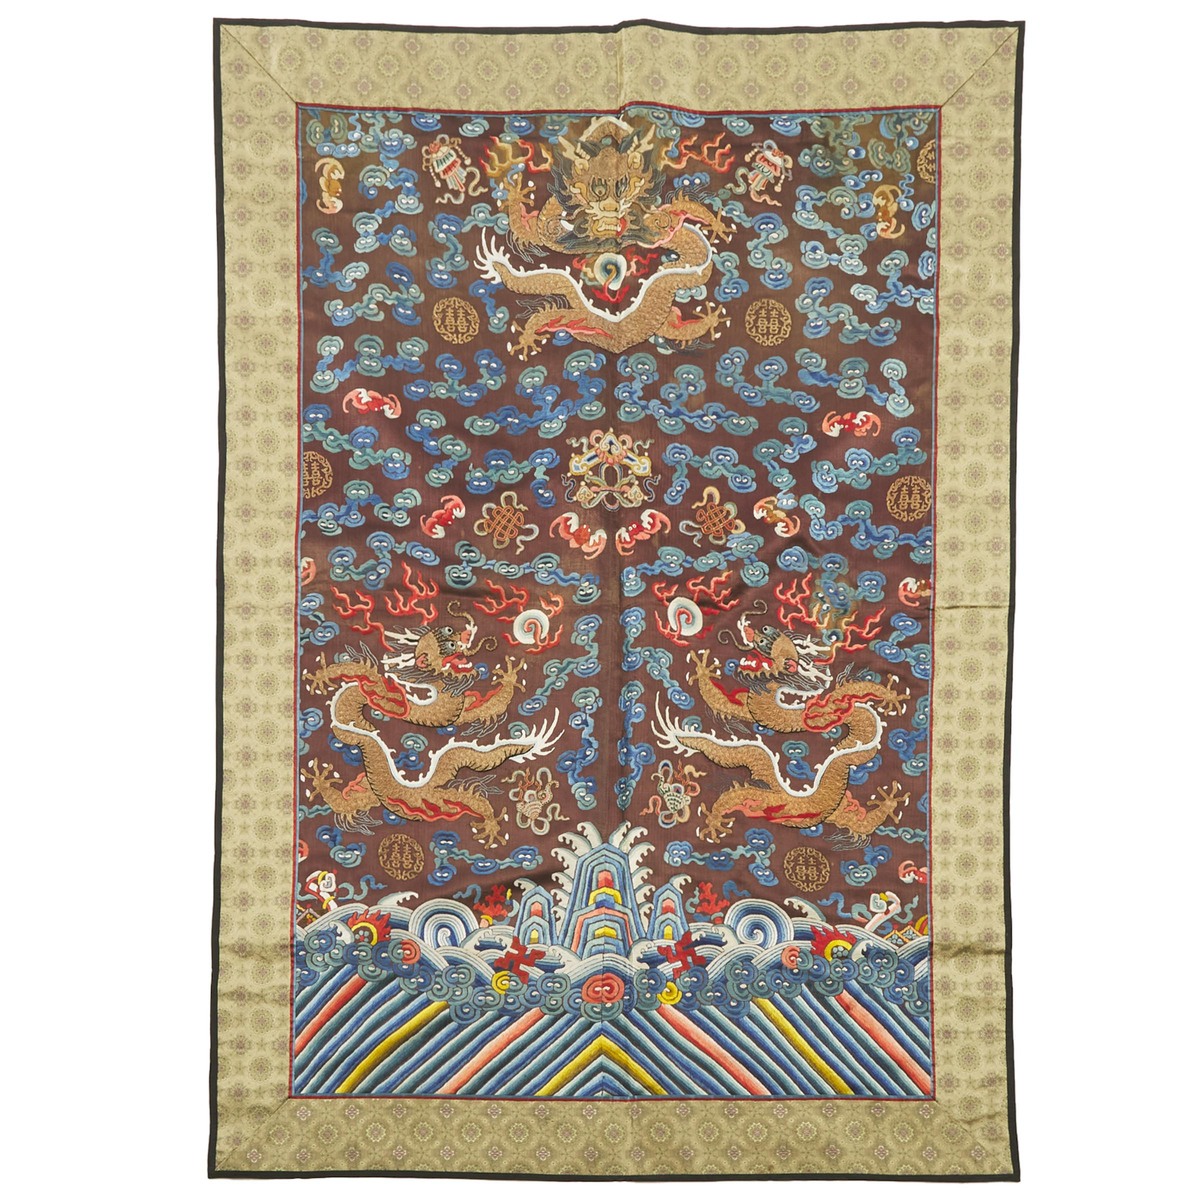 A Chestnut-Ground Embroidered Silk 'Dragon' Robe Fragment, 19th Century, 清 十九世纪 酱地龙袍片段, 47.2 x 33.5